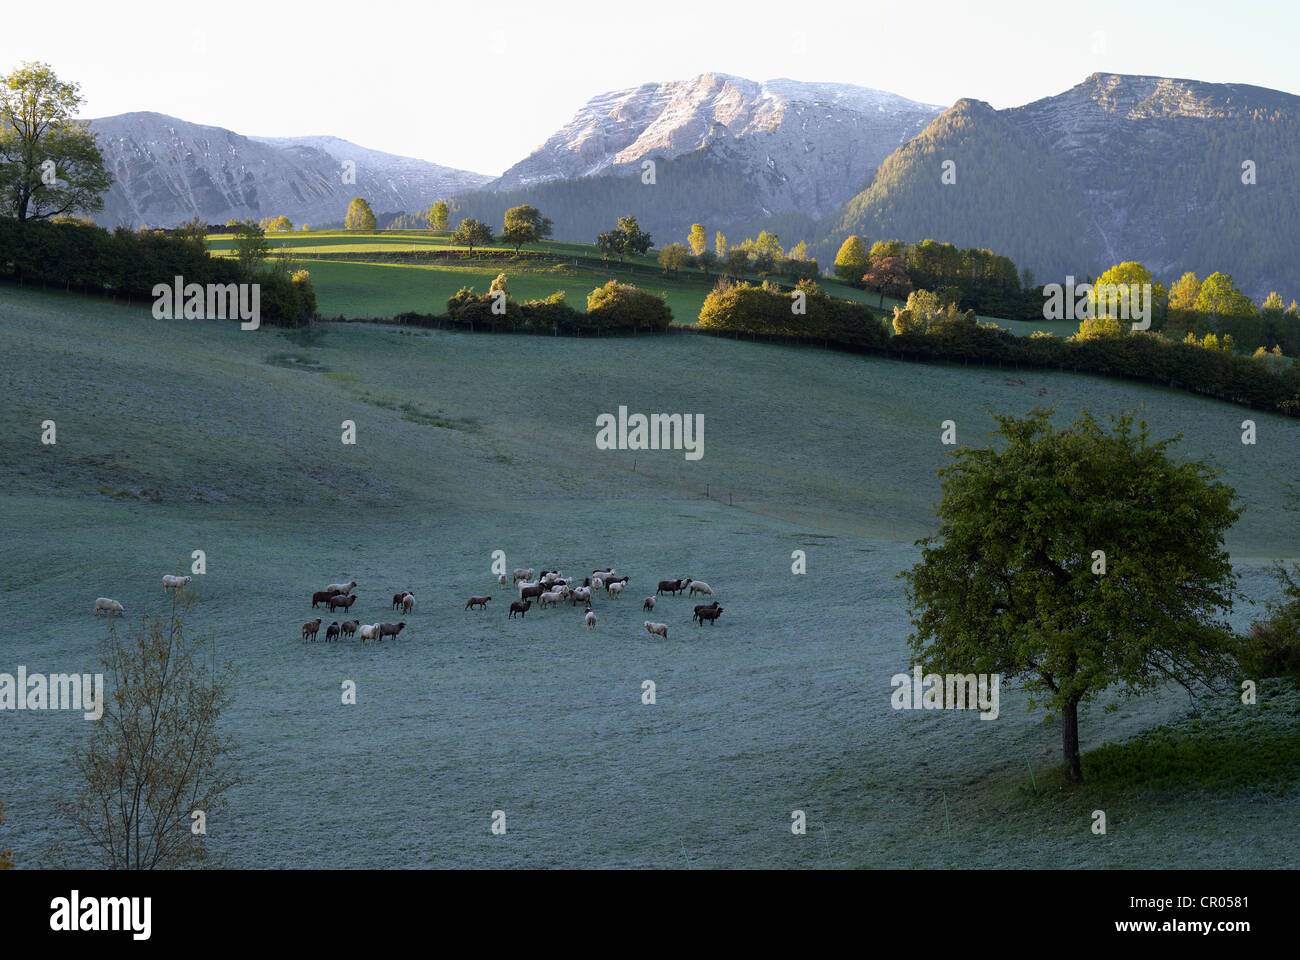 Flock of sheep in the morning dew, Limestone Alps National Park near Windischgarsten, Austria, Europe Stock Photo